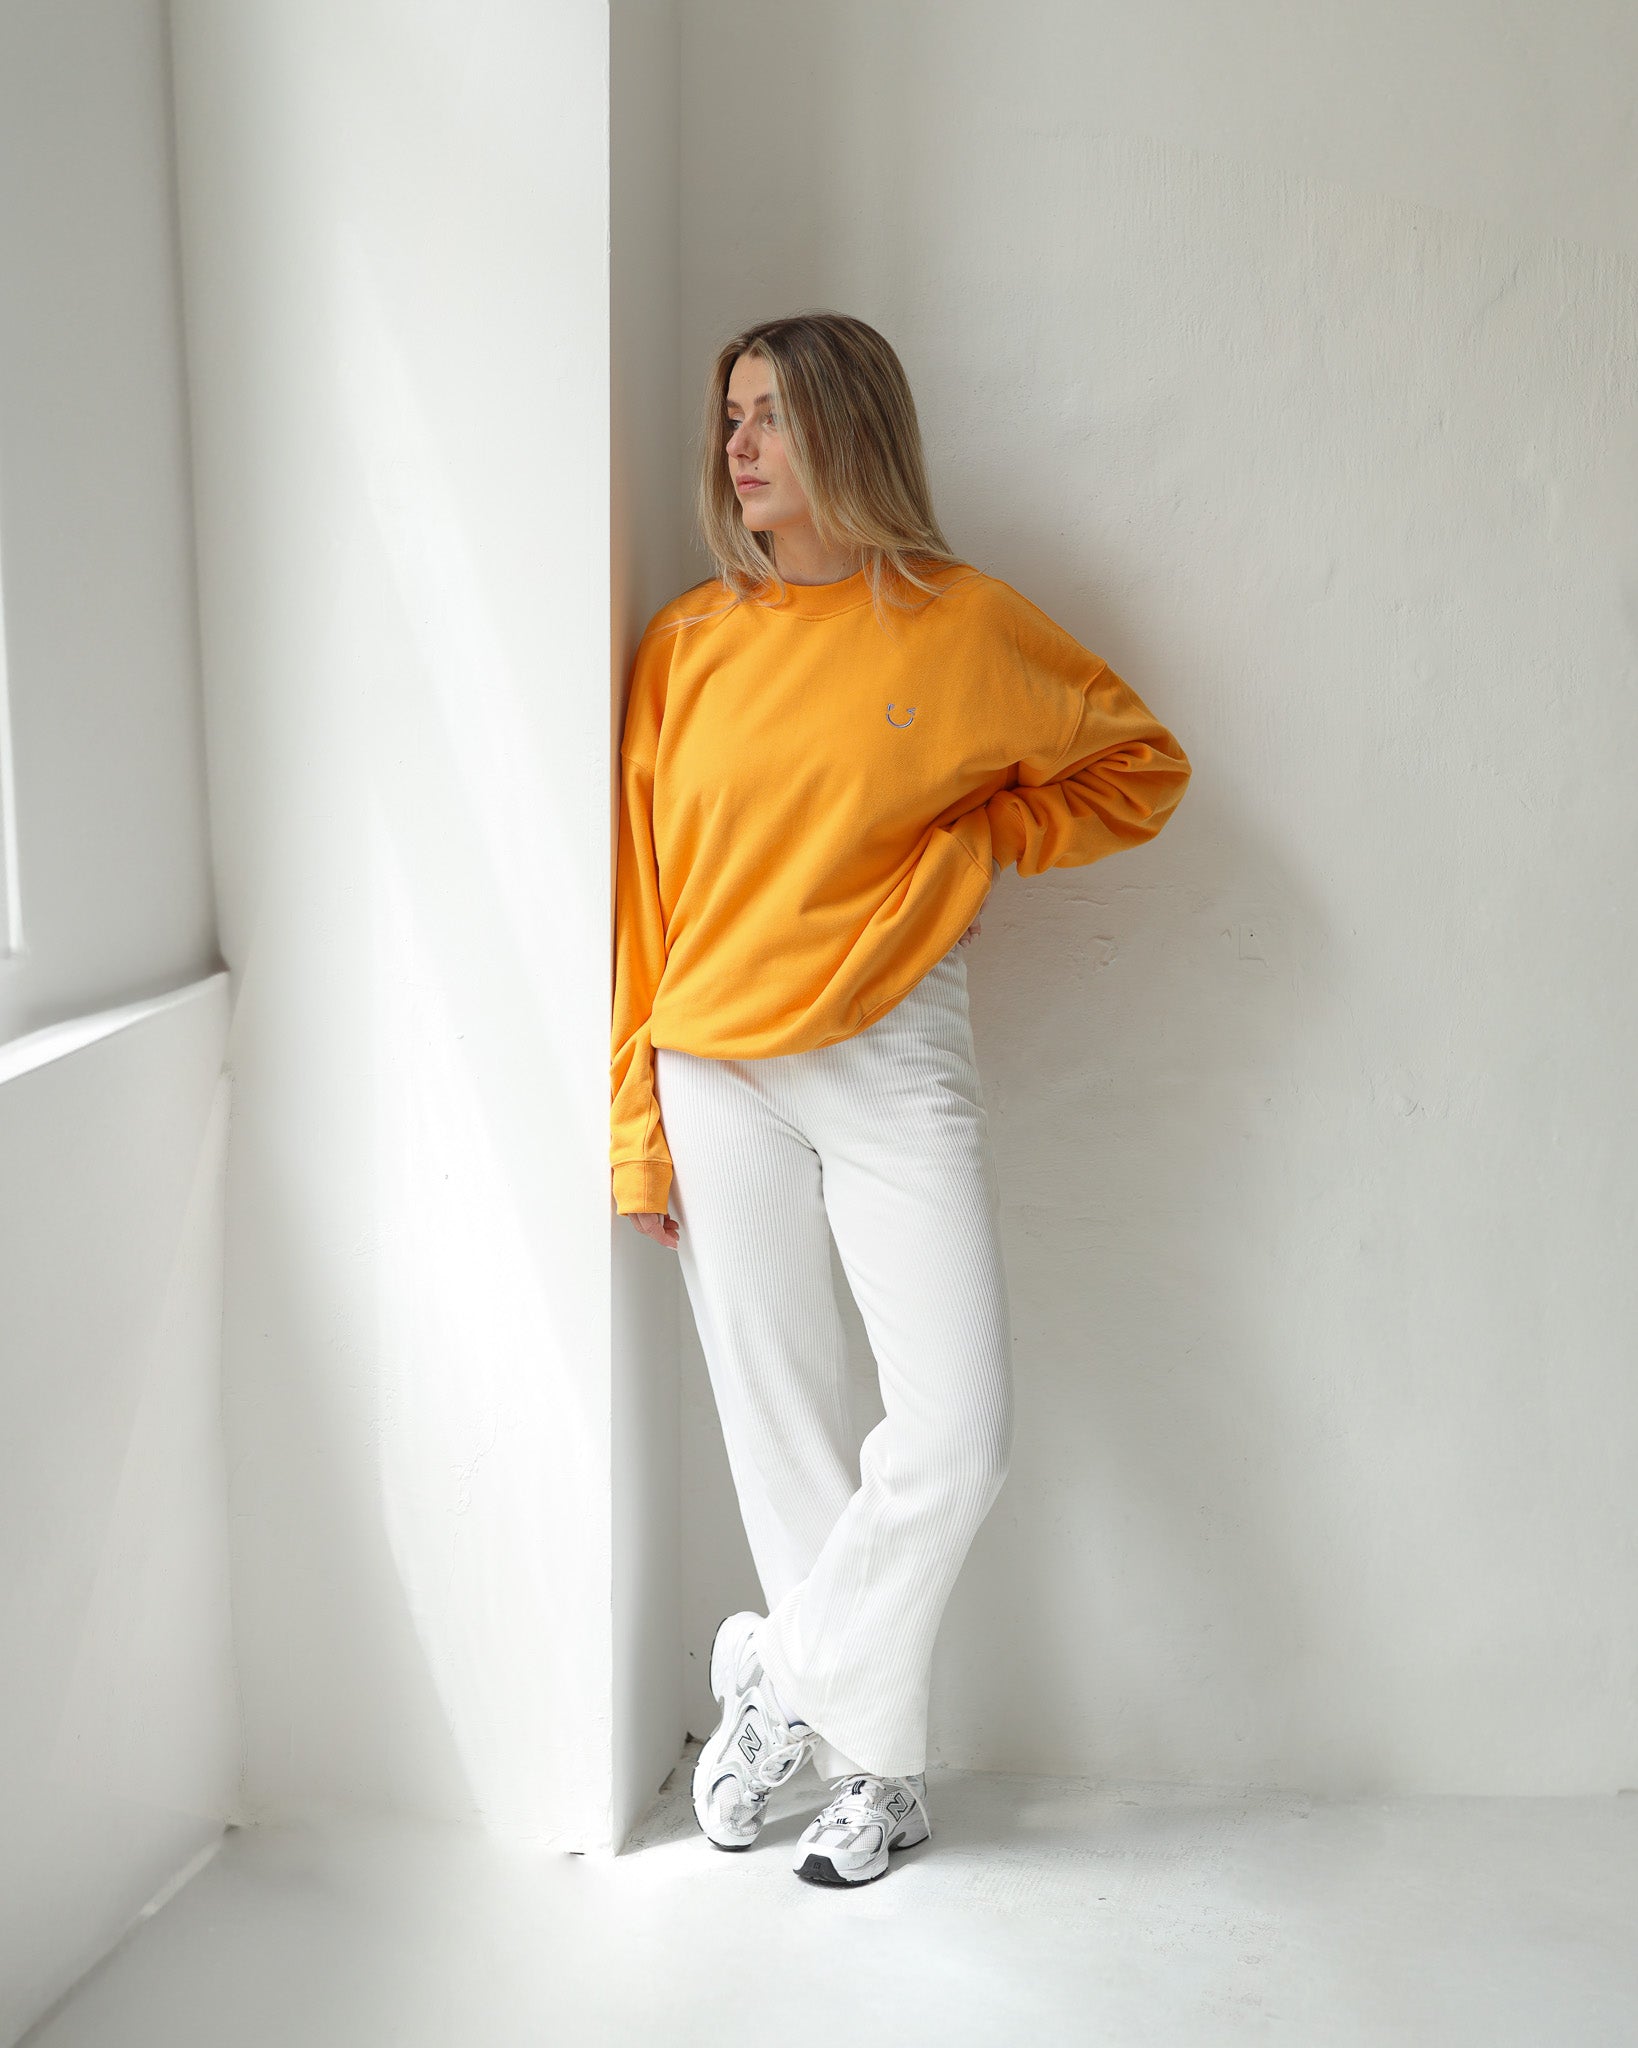 Sweater ICON - orange - FAMVIBES 